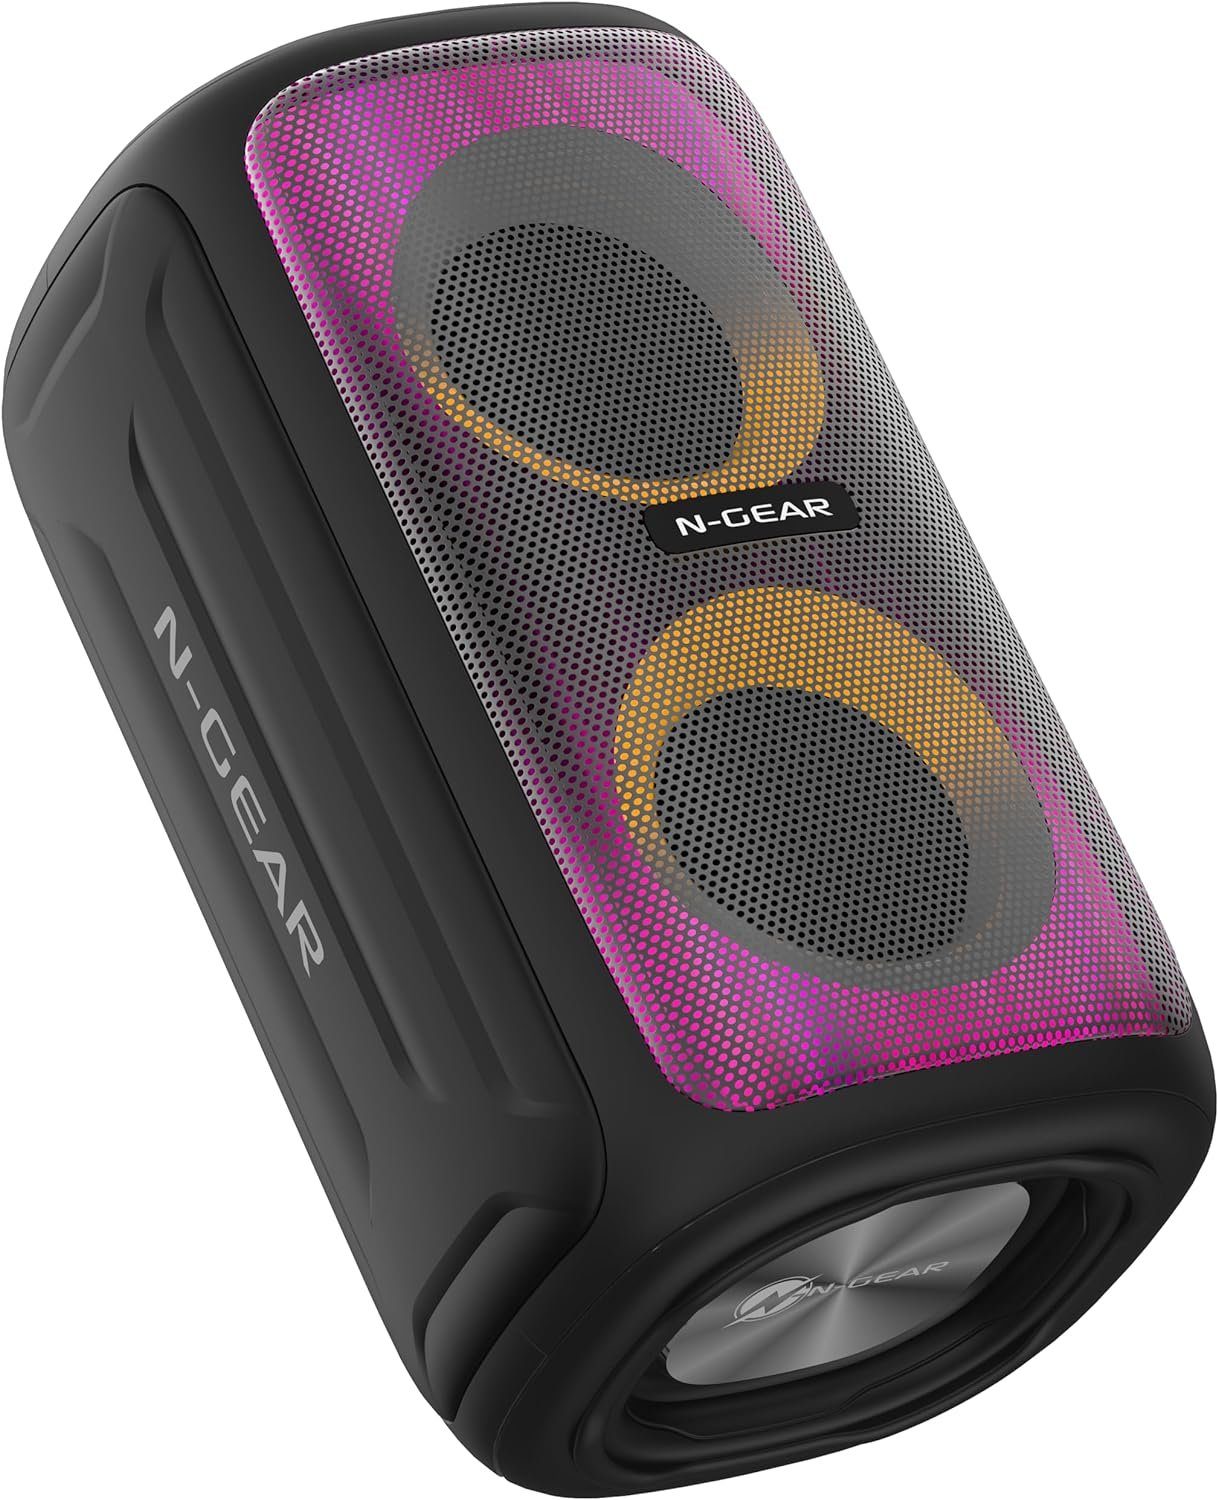 N-GEAR LGP Juke 101 - Kompakter Bluetooth Lautsprecher mit RGB-LED-Lichtshow Bluetooth-Lautsprecher (50 W, mit RGB-LED-Lichtshow, 60W Leistung, 8 Stunden Spielzeit)